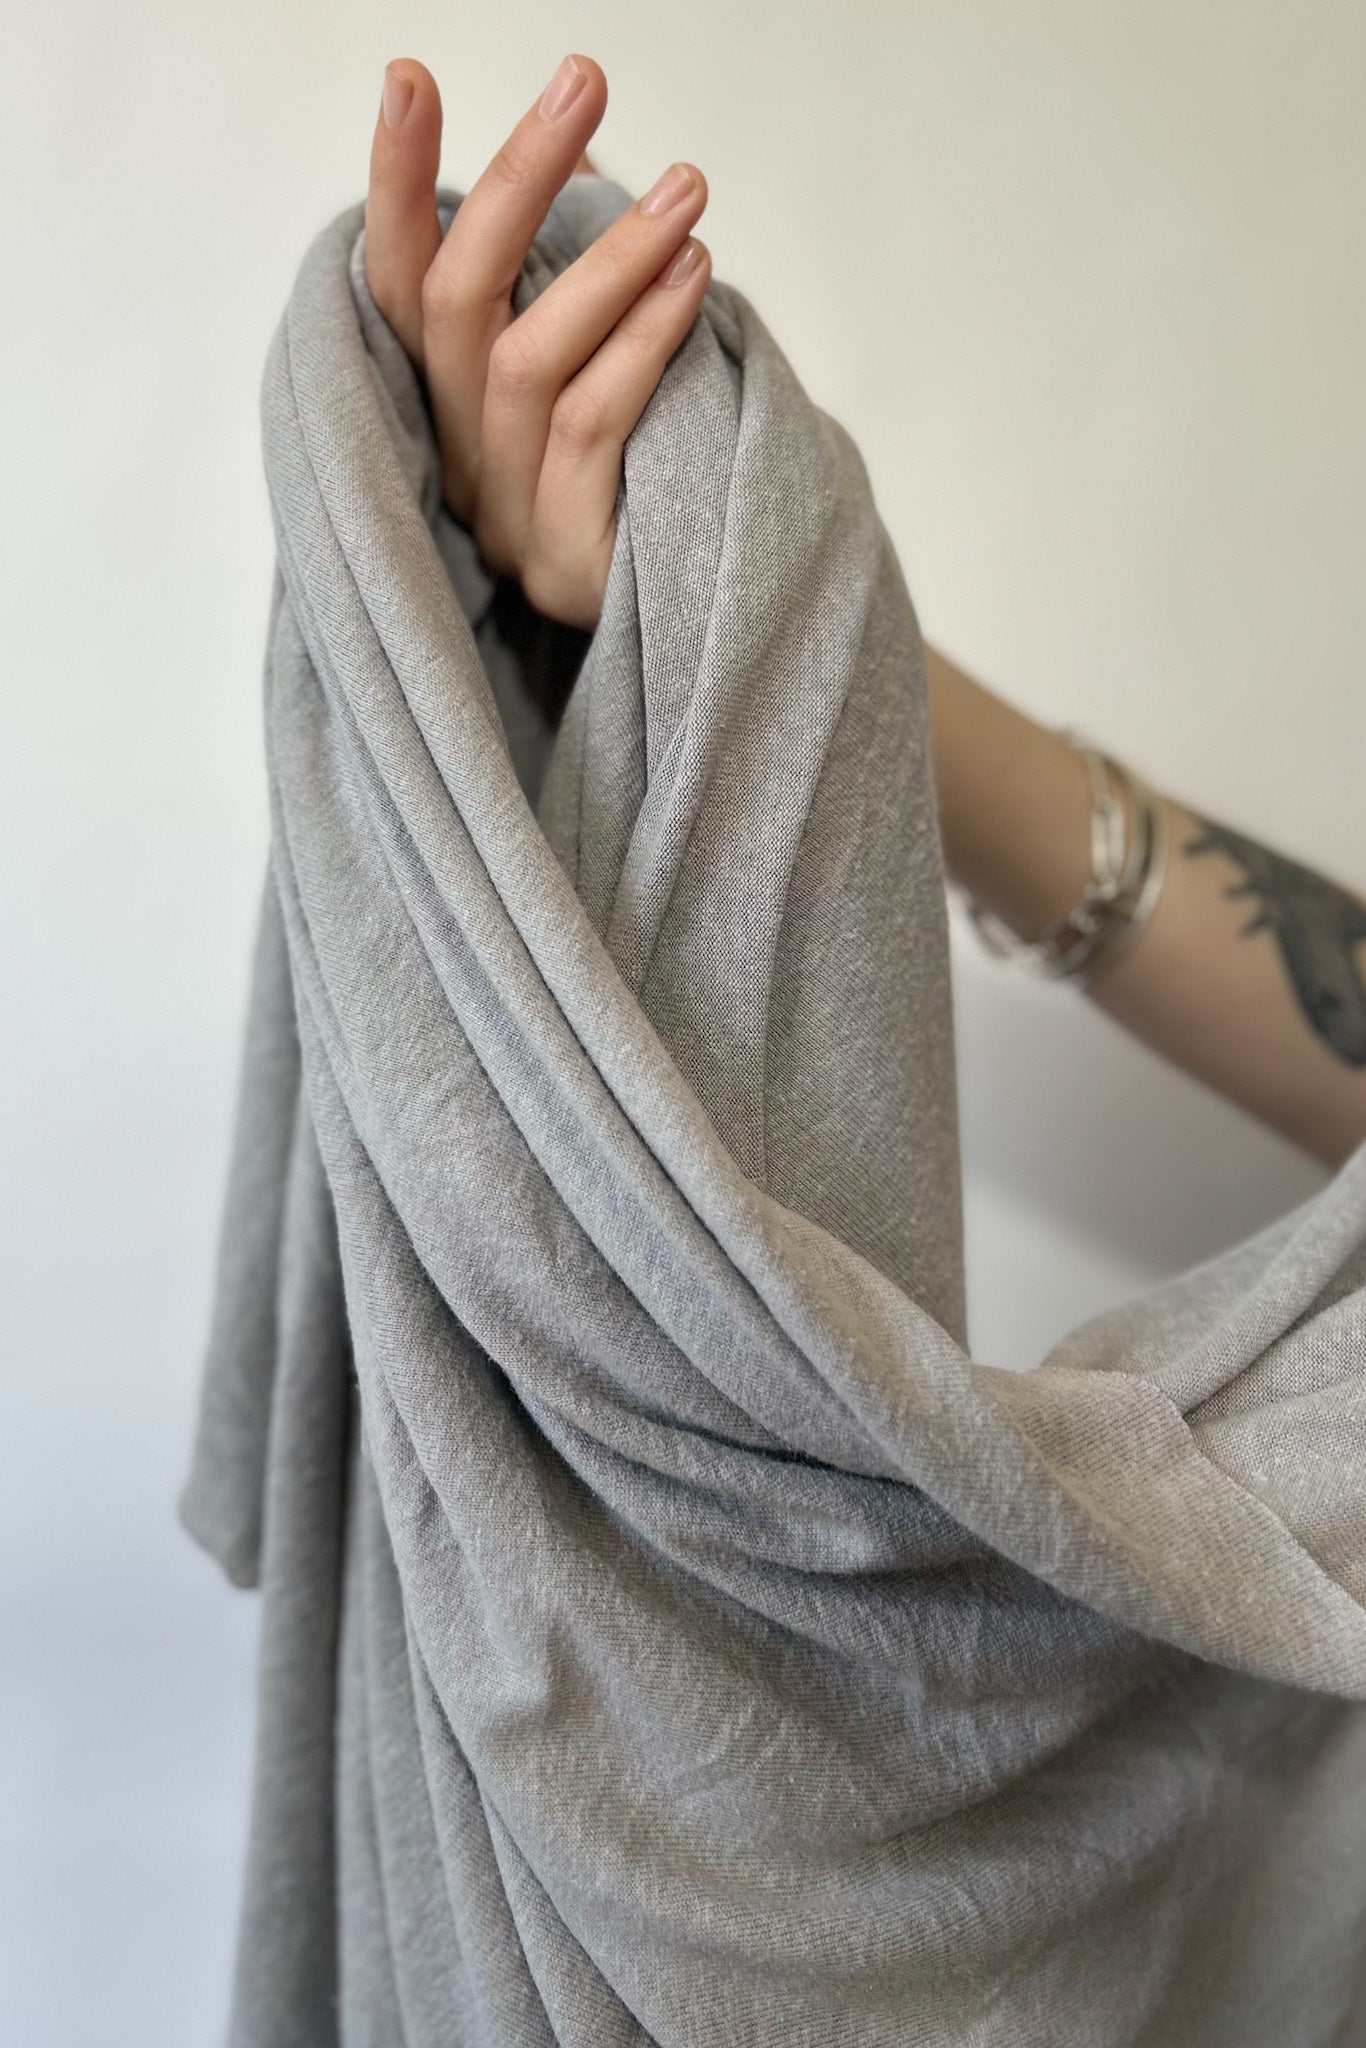 Hand holding grey hemp and lyocell jersey knit fabric